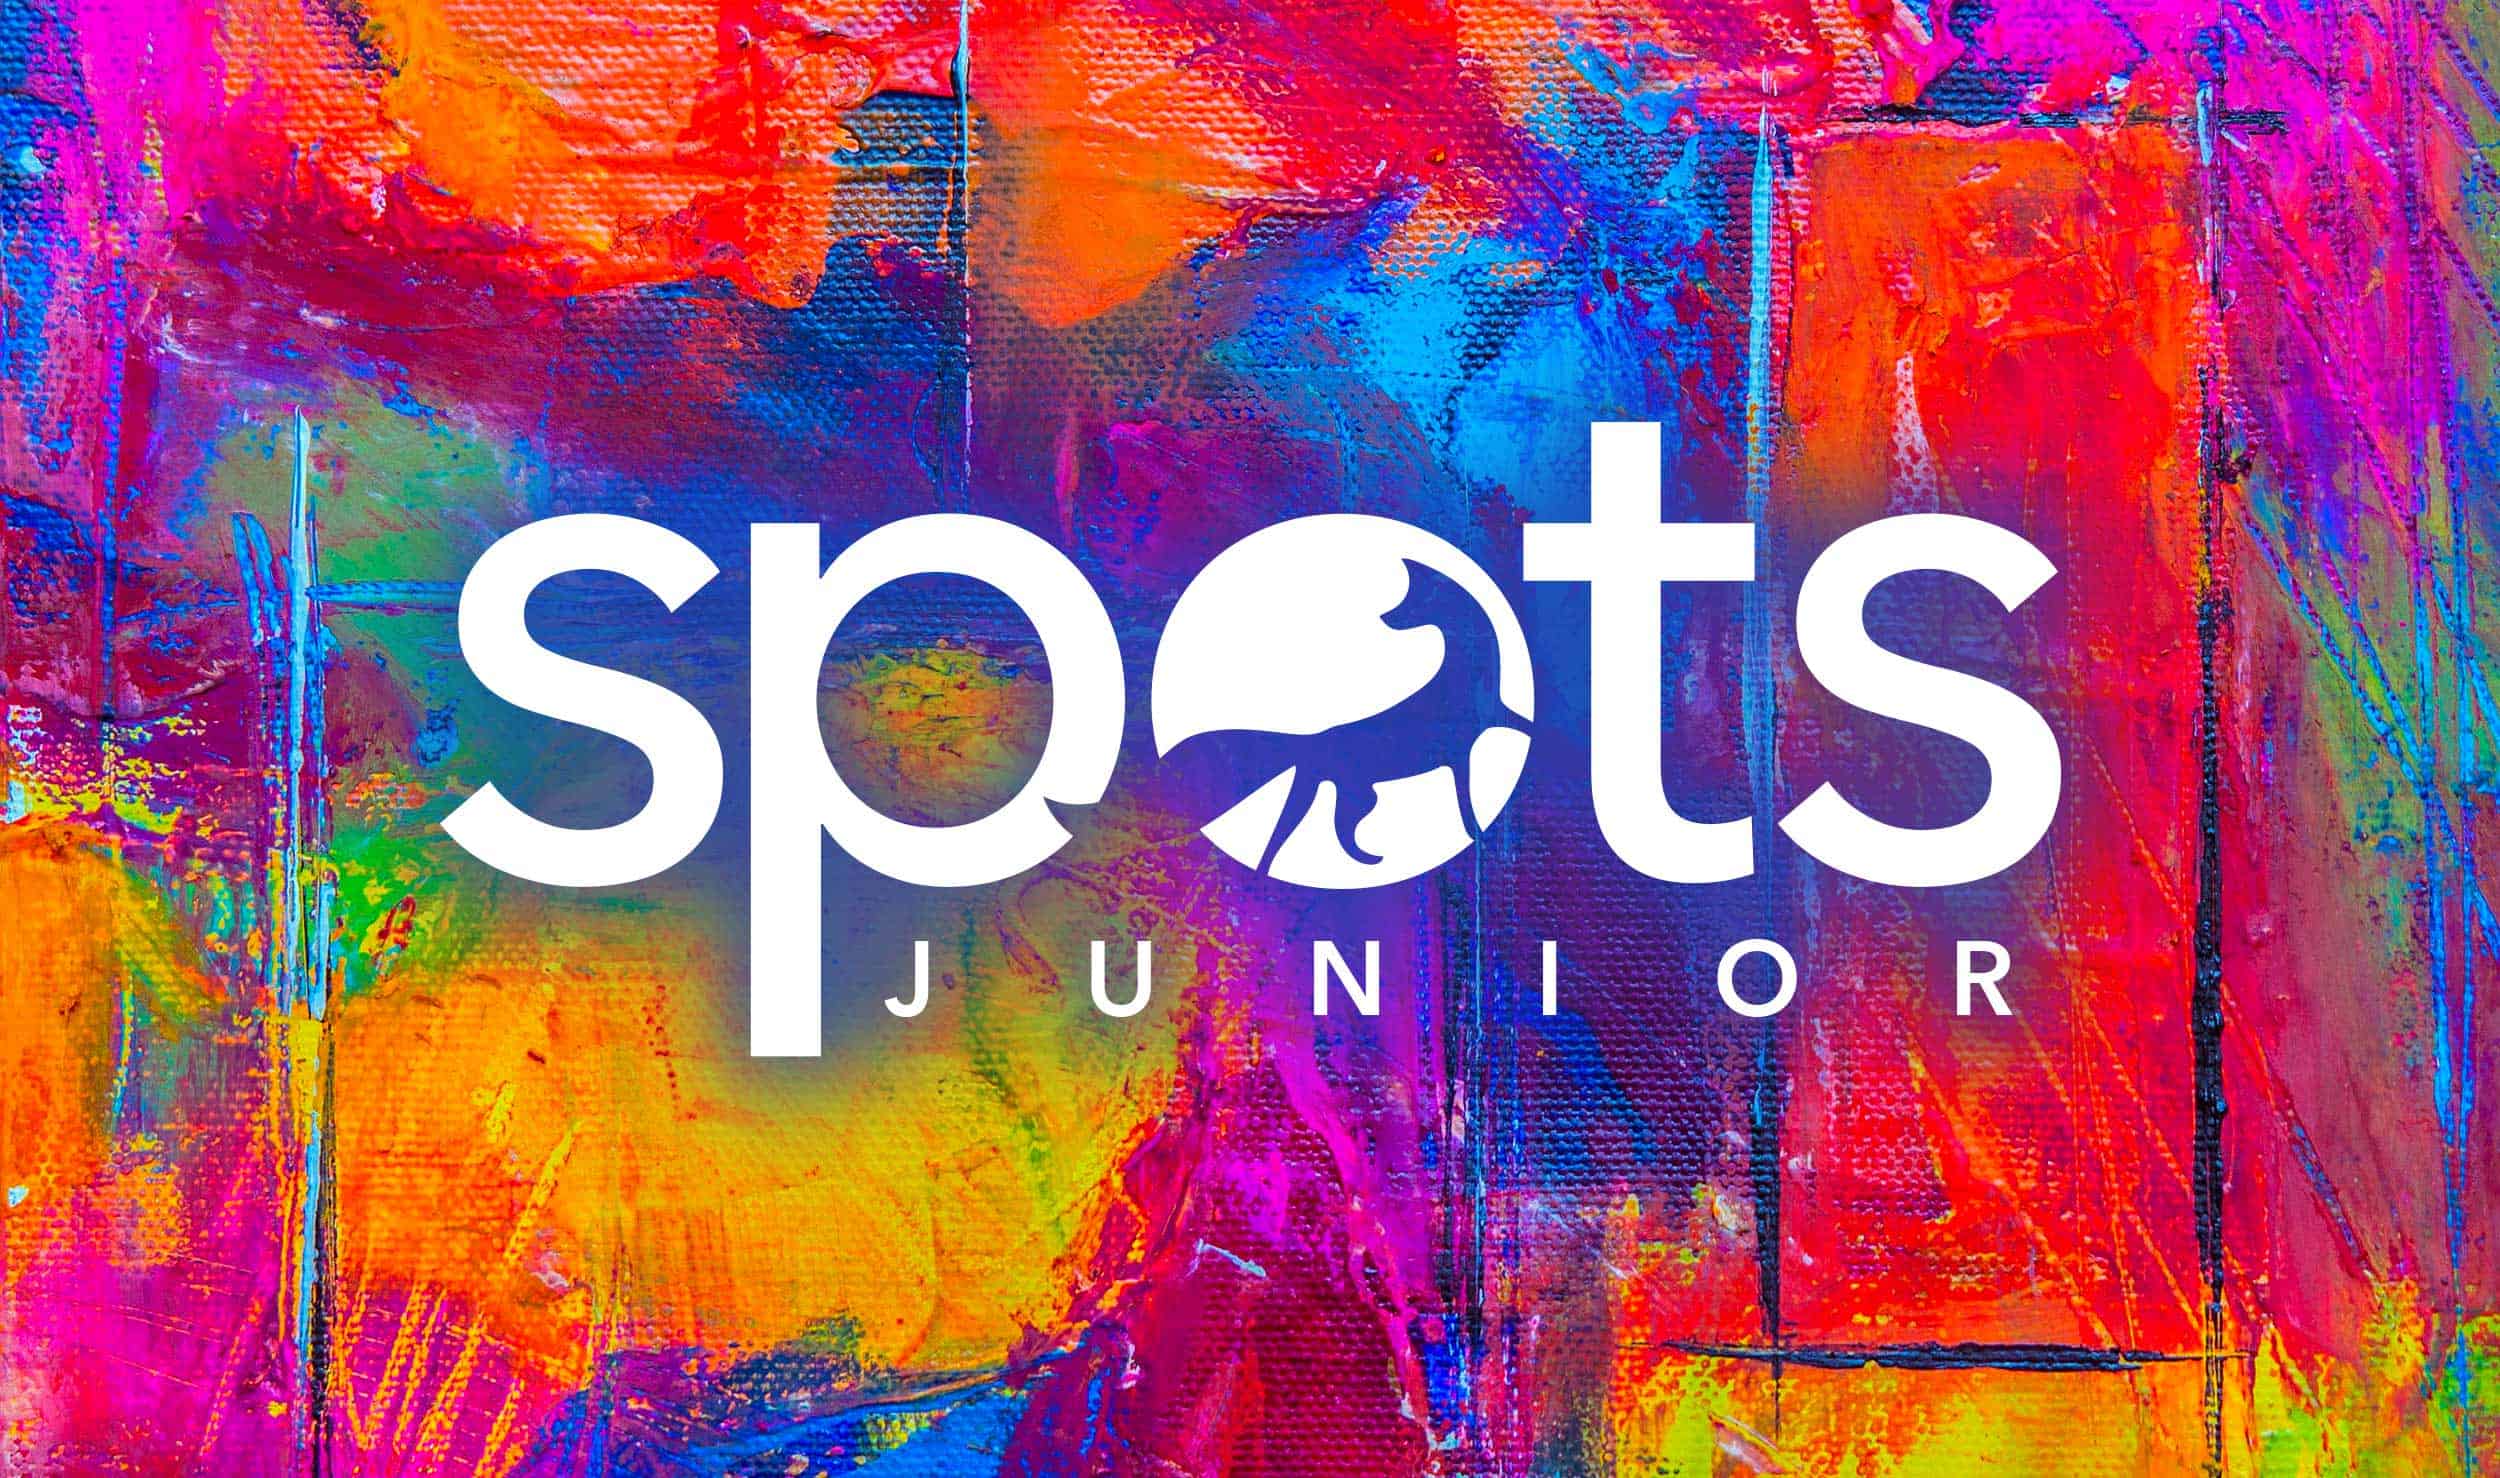 Introducing Spots Junior!